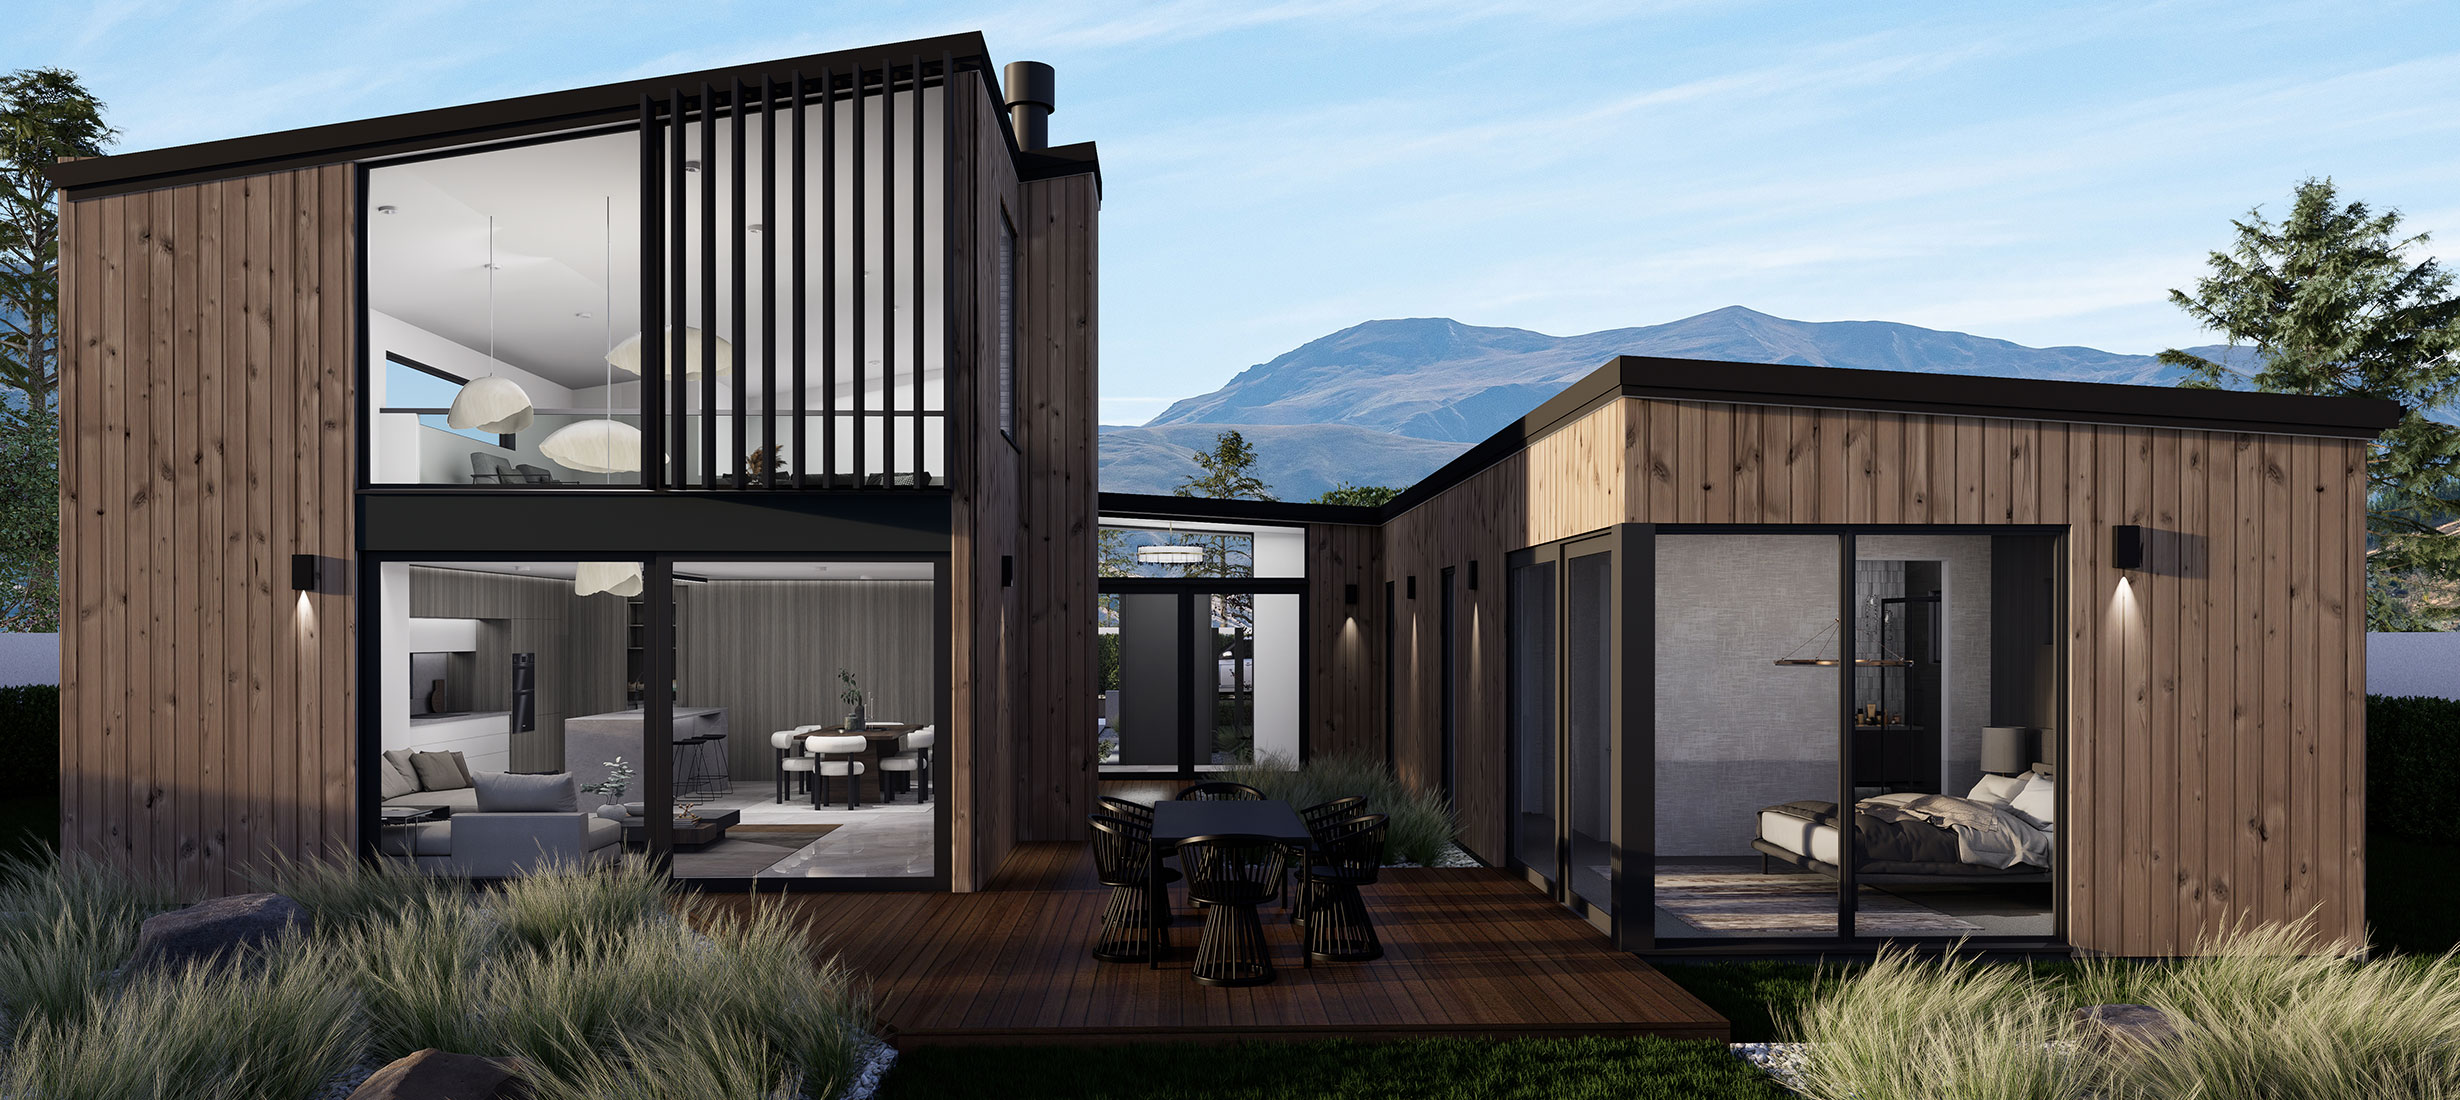 Hallmark Homes Prestige Series Cheviot House Plan Back View Design Christchurch NZ.